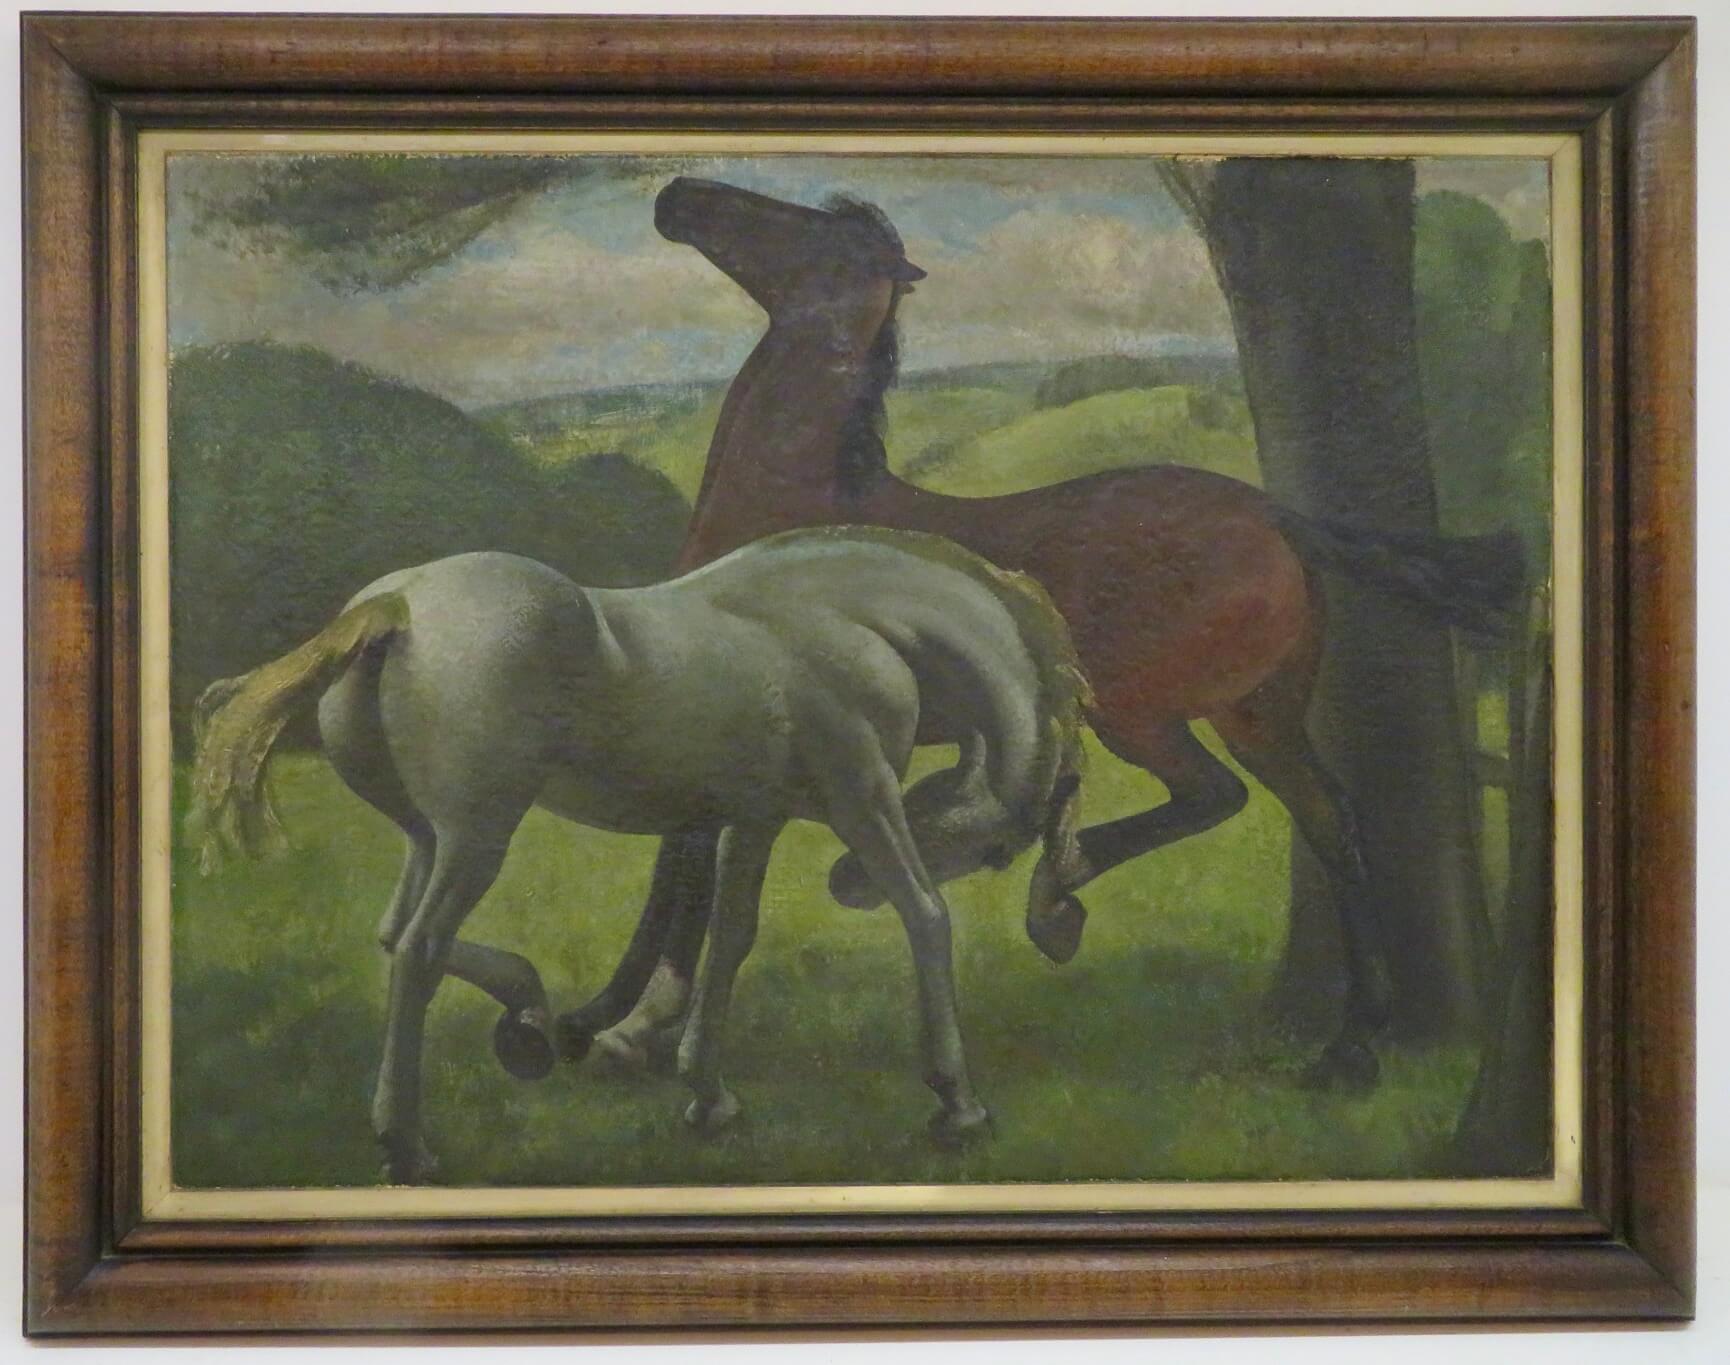 Original 1940's MID CENTURY Horses stylised oil painting listed English Painter 